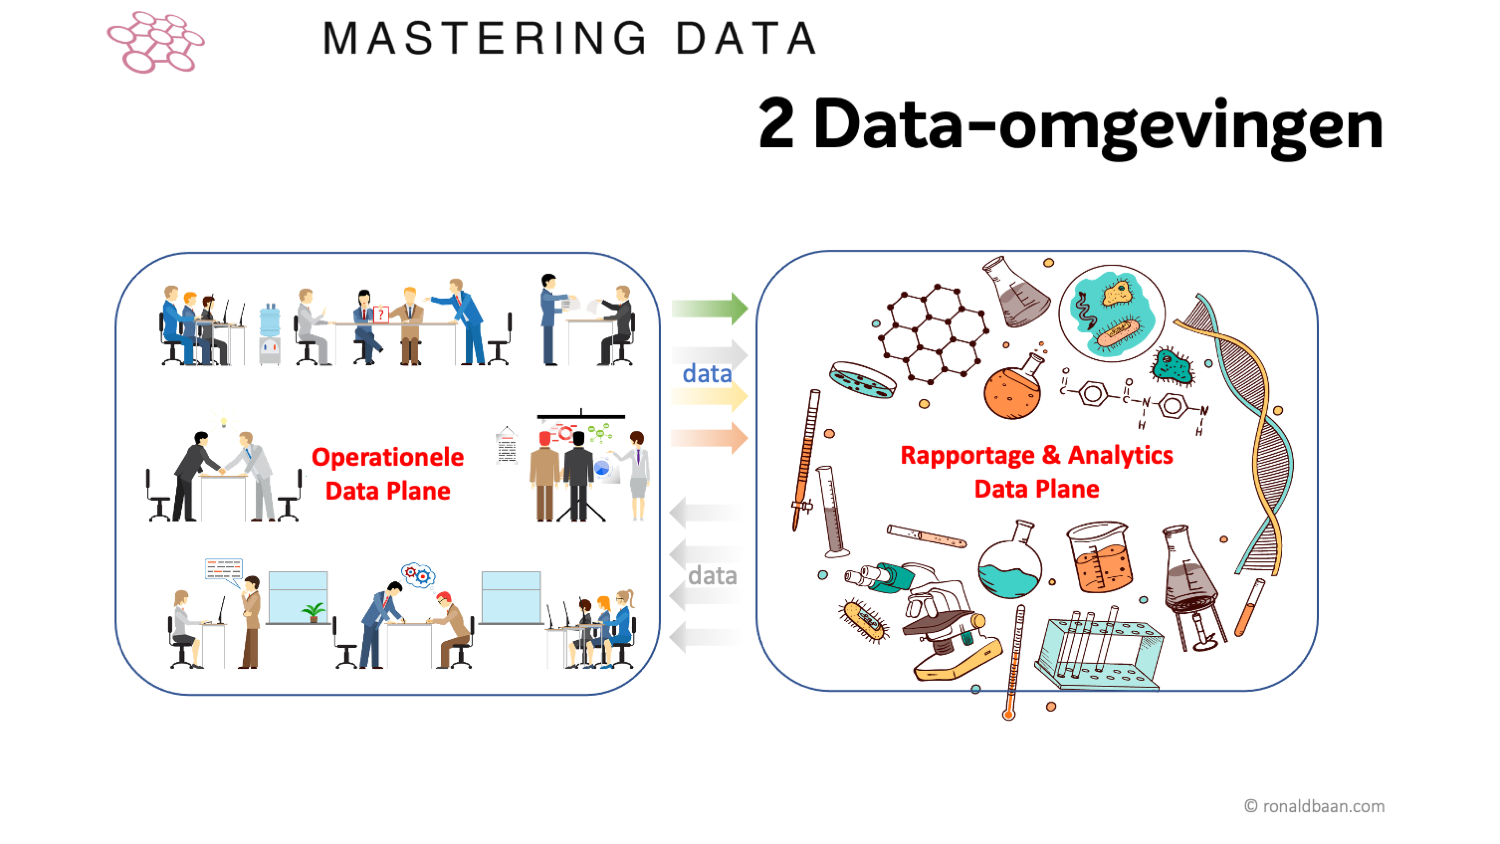 Operational vs. Analytics Data Plane